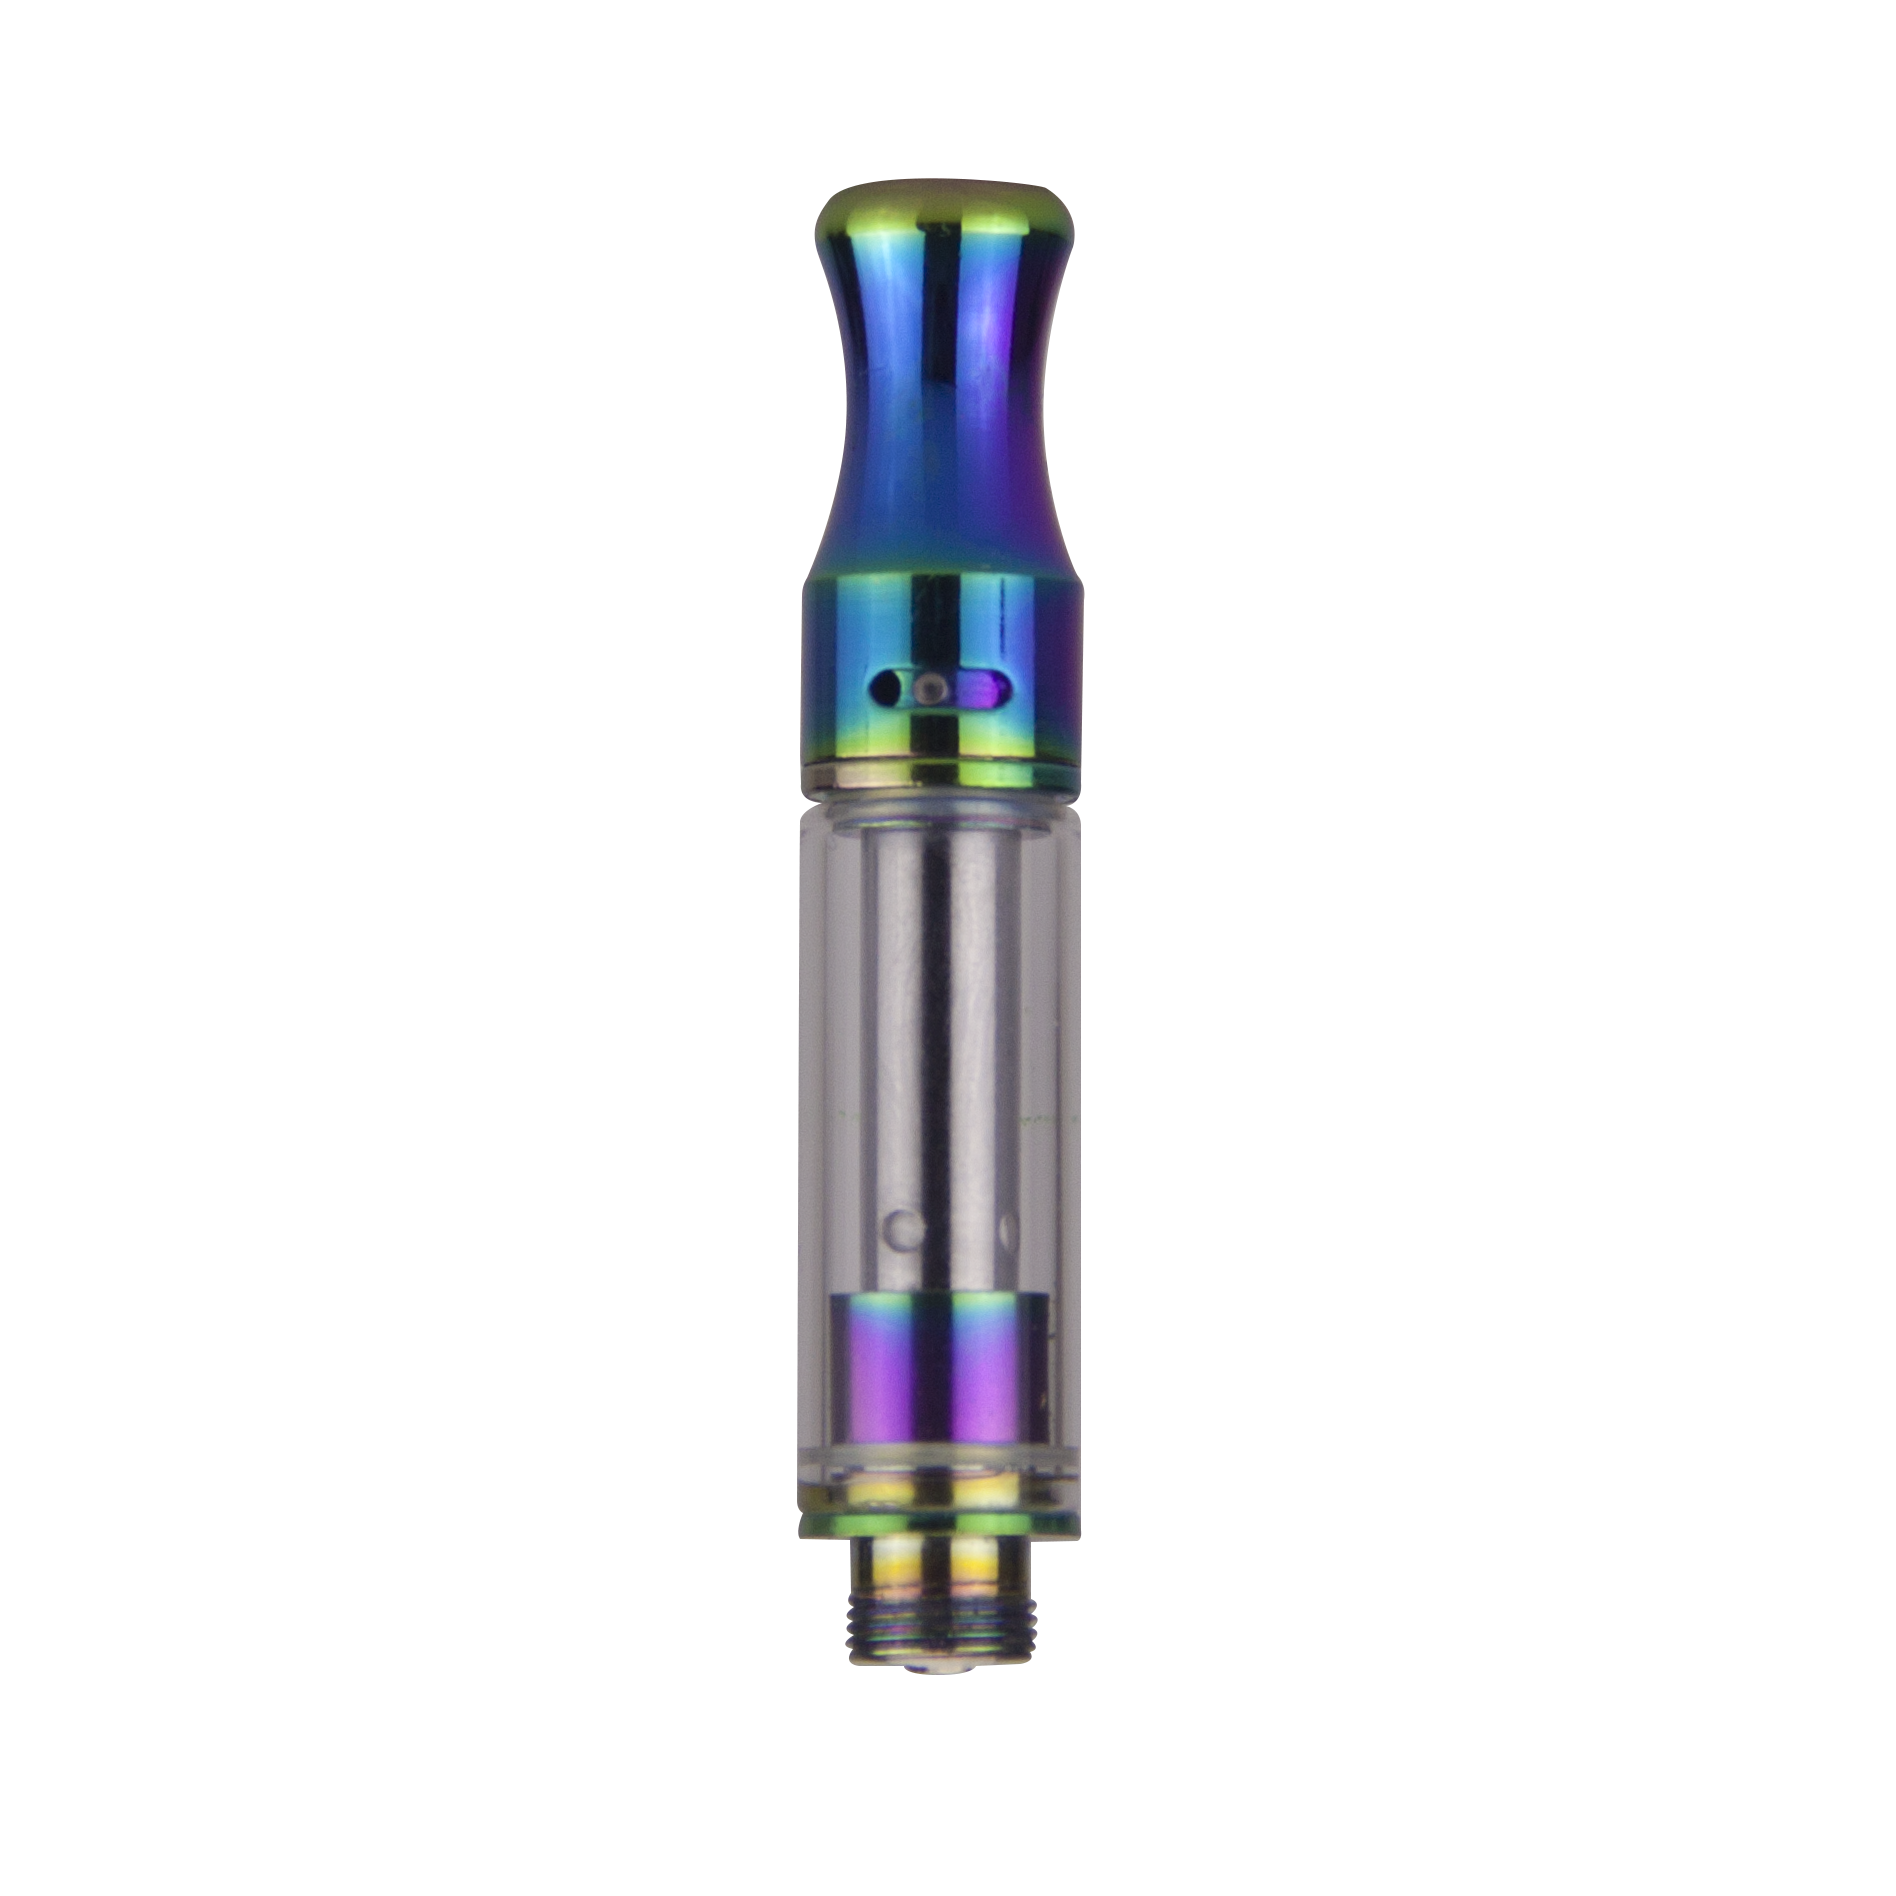 Rainbow 0.5 ml DM 009 510 thread vape cartridge with and adjustable airflow port